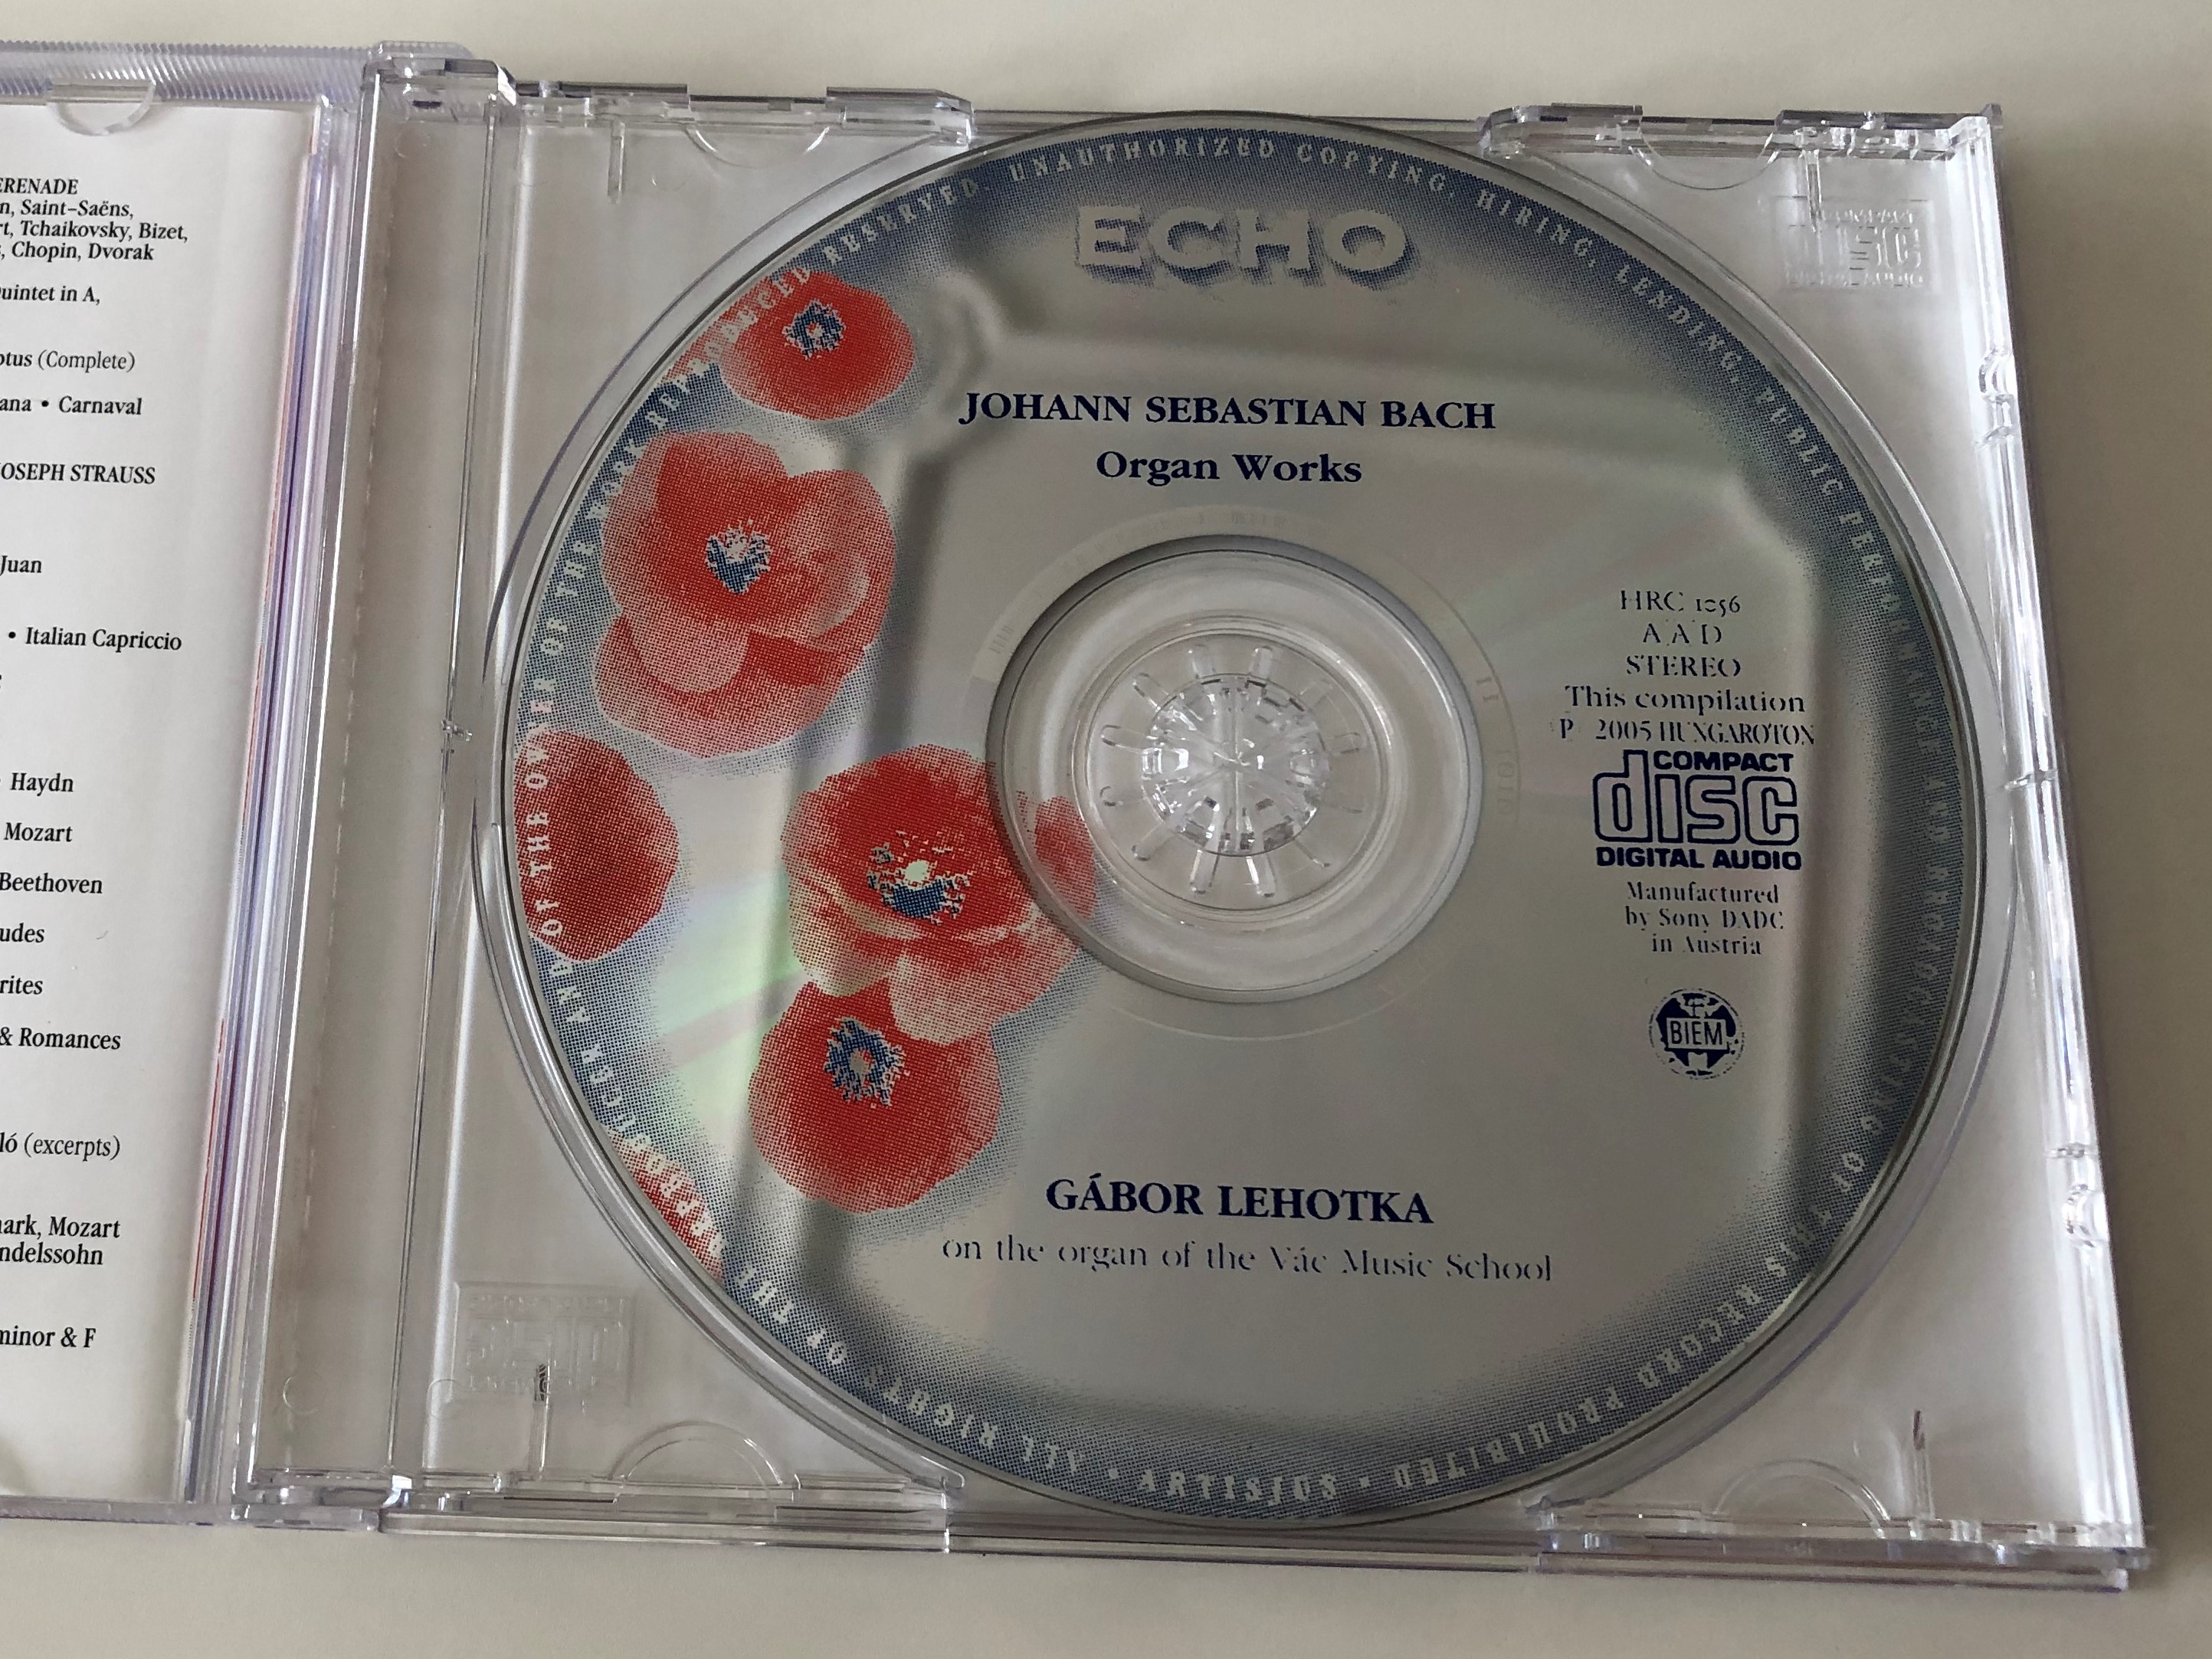 hungaroton-echo-collection-j.-s.-bach-toccata-fugue-in-d-minor-pastorale-in-f-major-toccata-adagio-fugue-in-c-major-gabor-lehotka-organ-hungaroton-classic-audio-cd-2005-stereo-3-.jpg